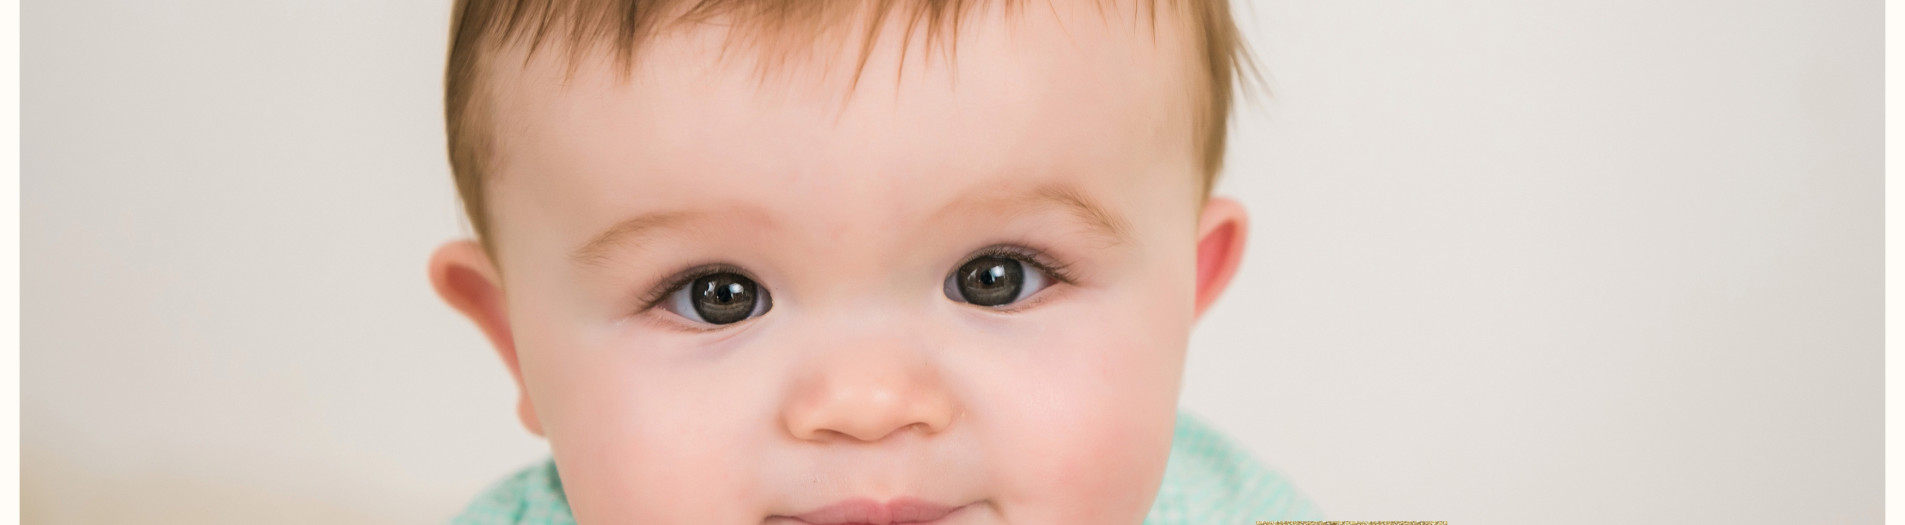 Baby R 9 months | Child Photography | Newark, DE